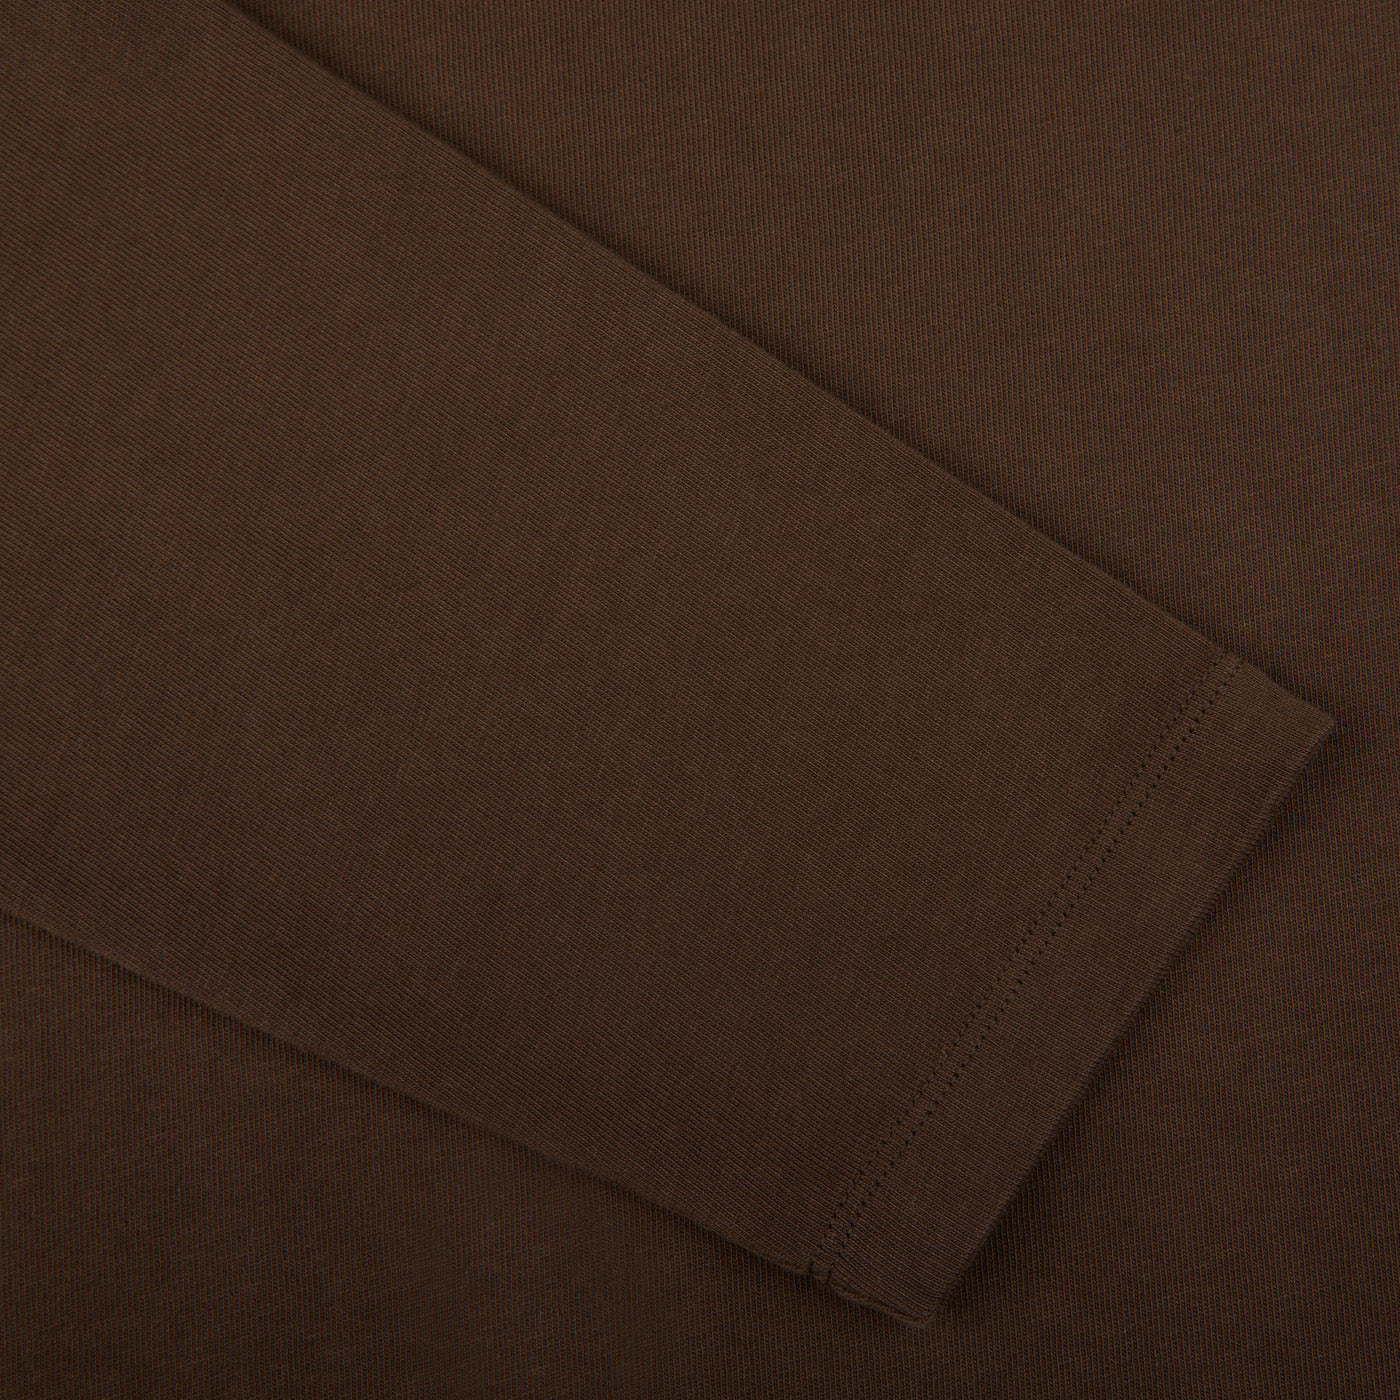 A close up of a Dark Brown Organic Cotton LS T-Shirt by Tela Genova.